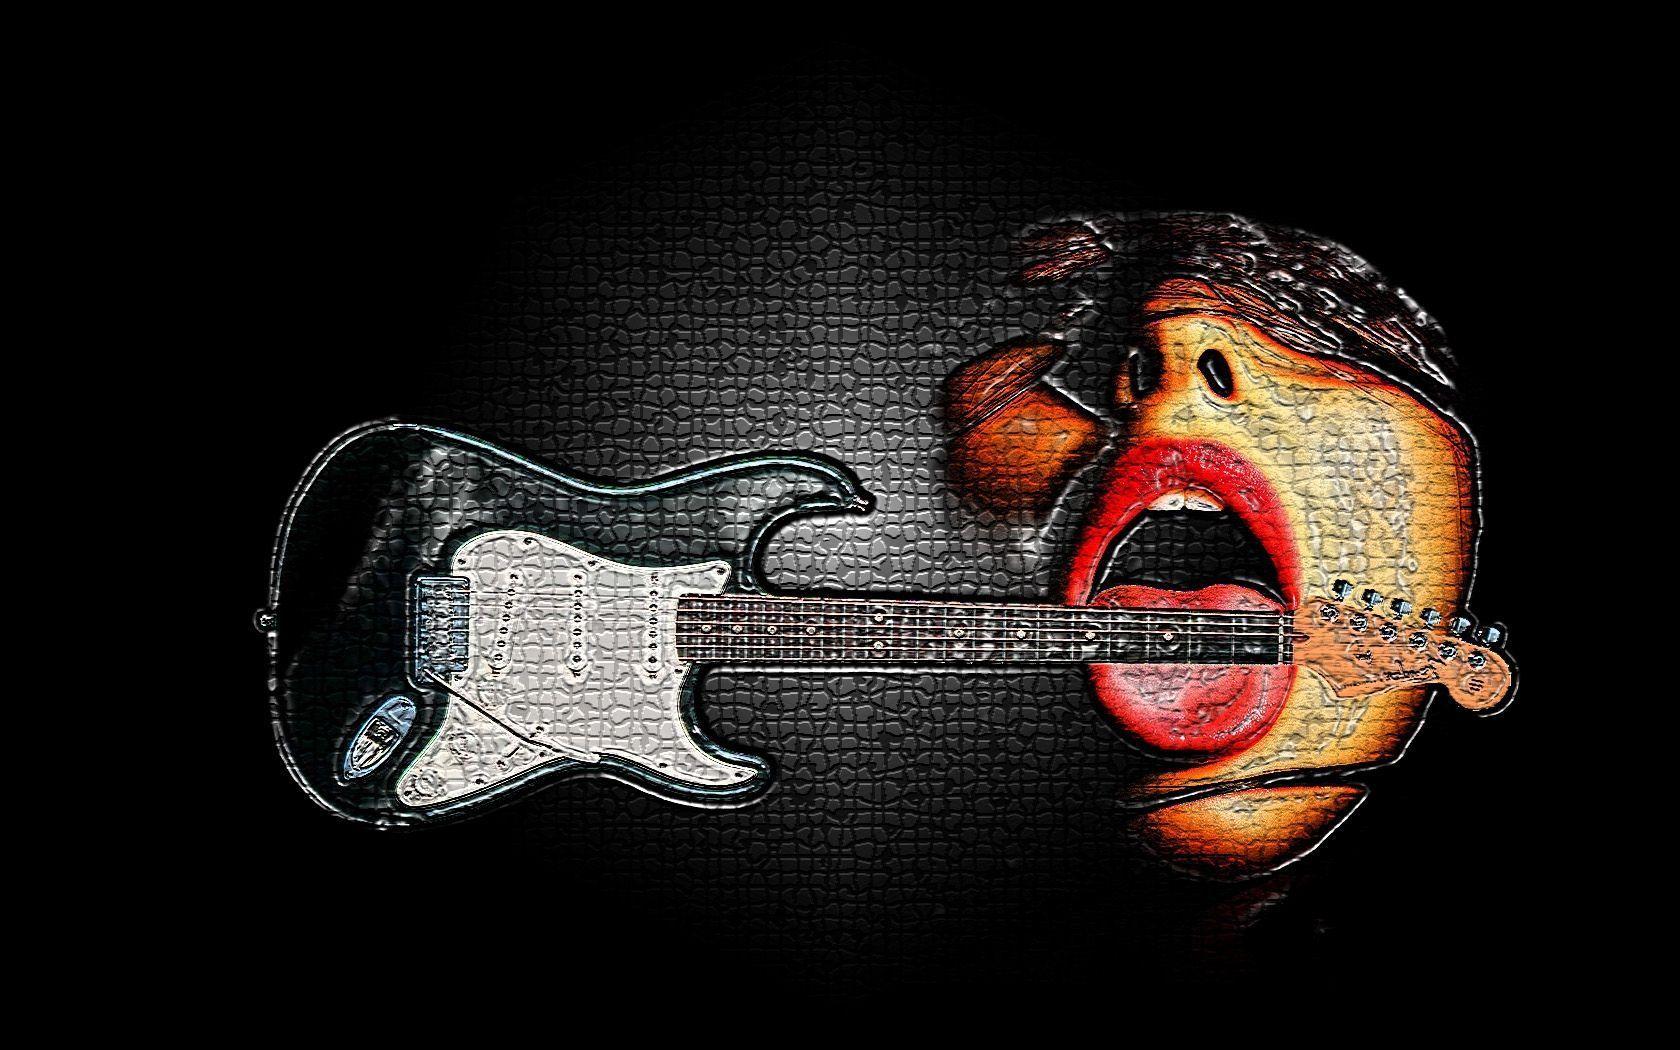 3D Guitar Wallpaper